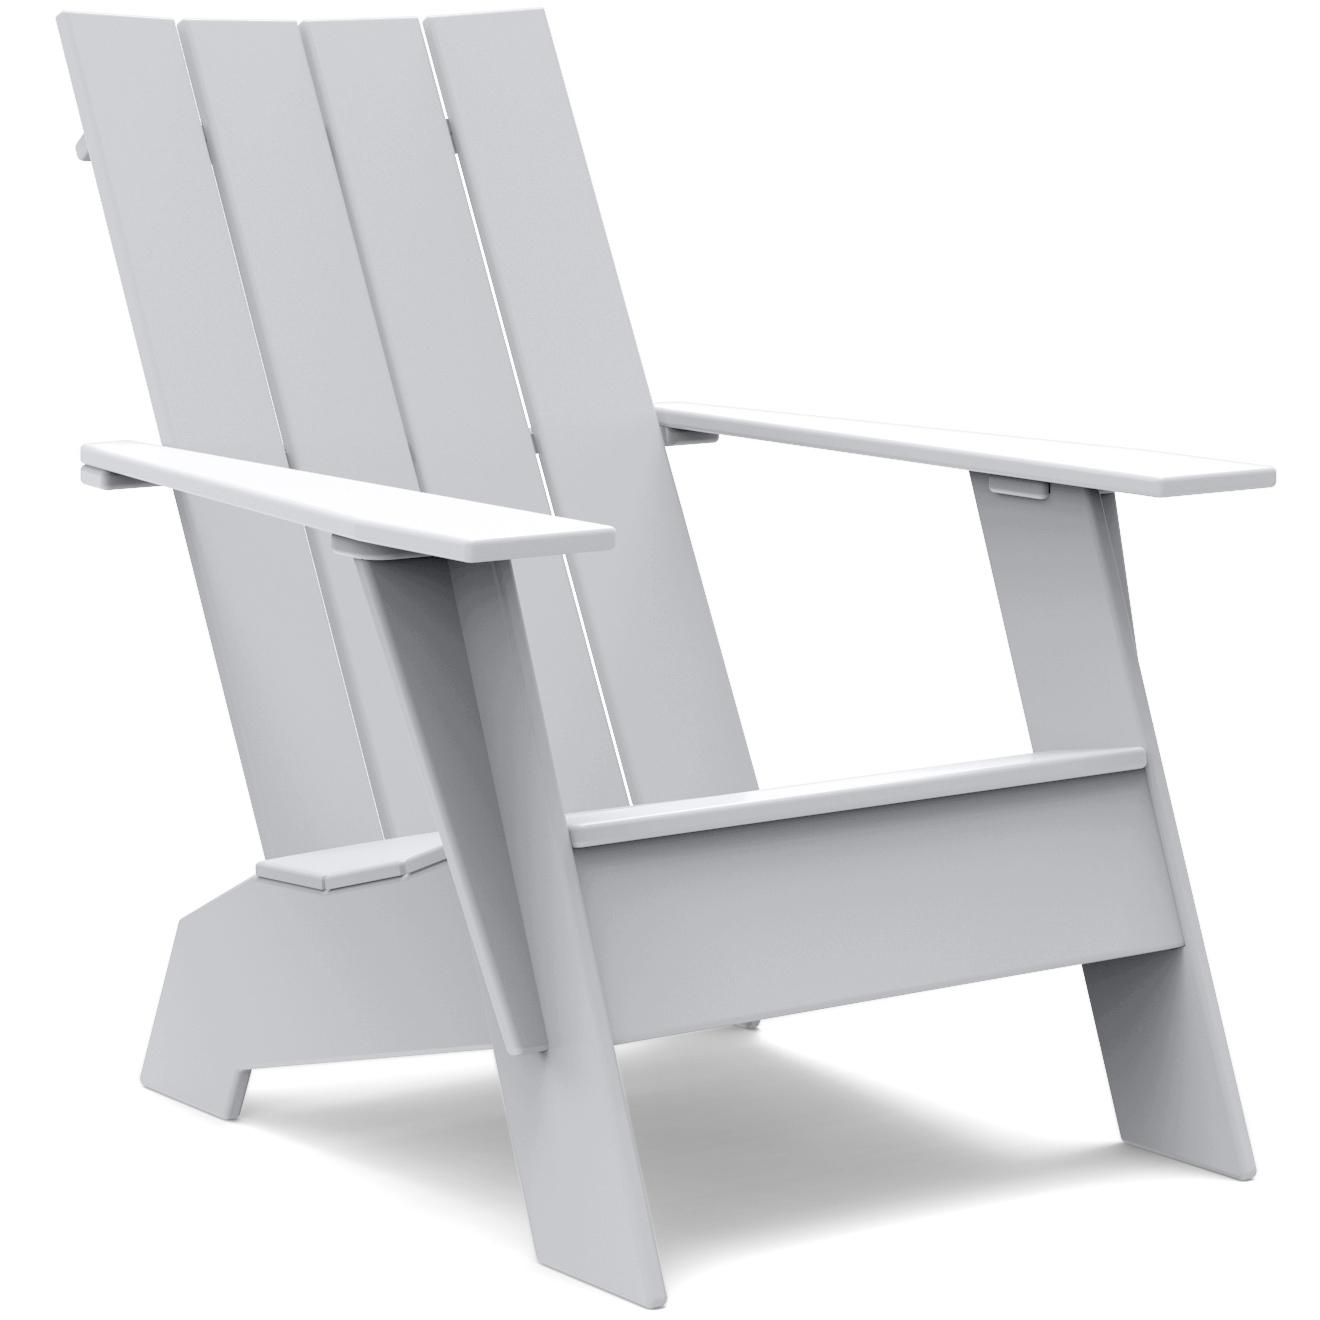 Loll Designs Adirondack fauteuil drift wood